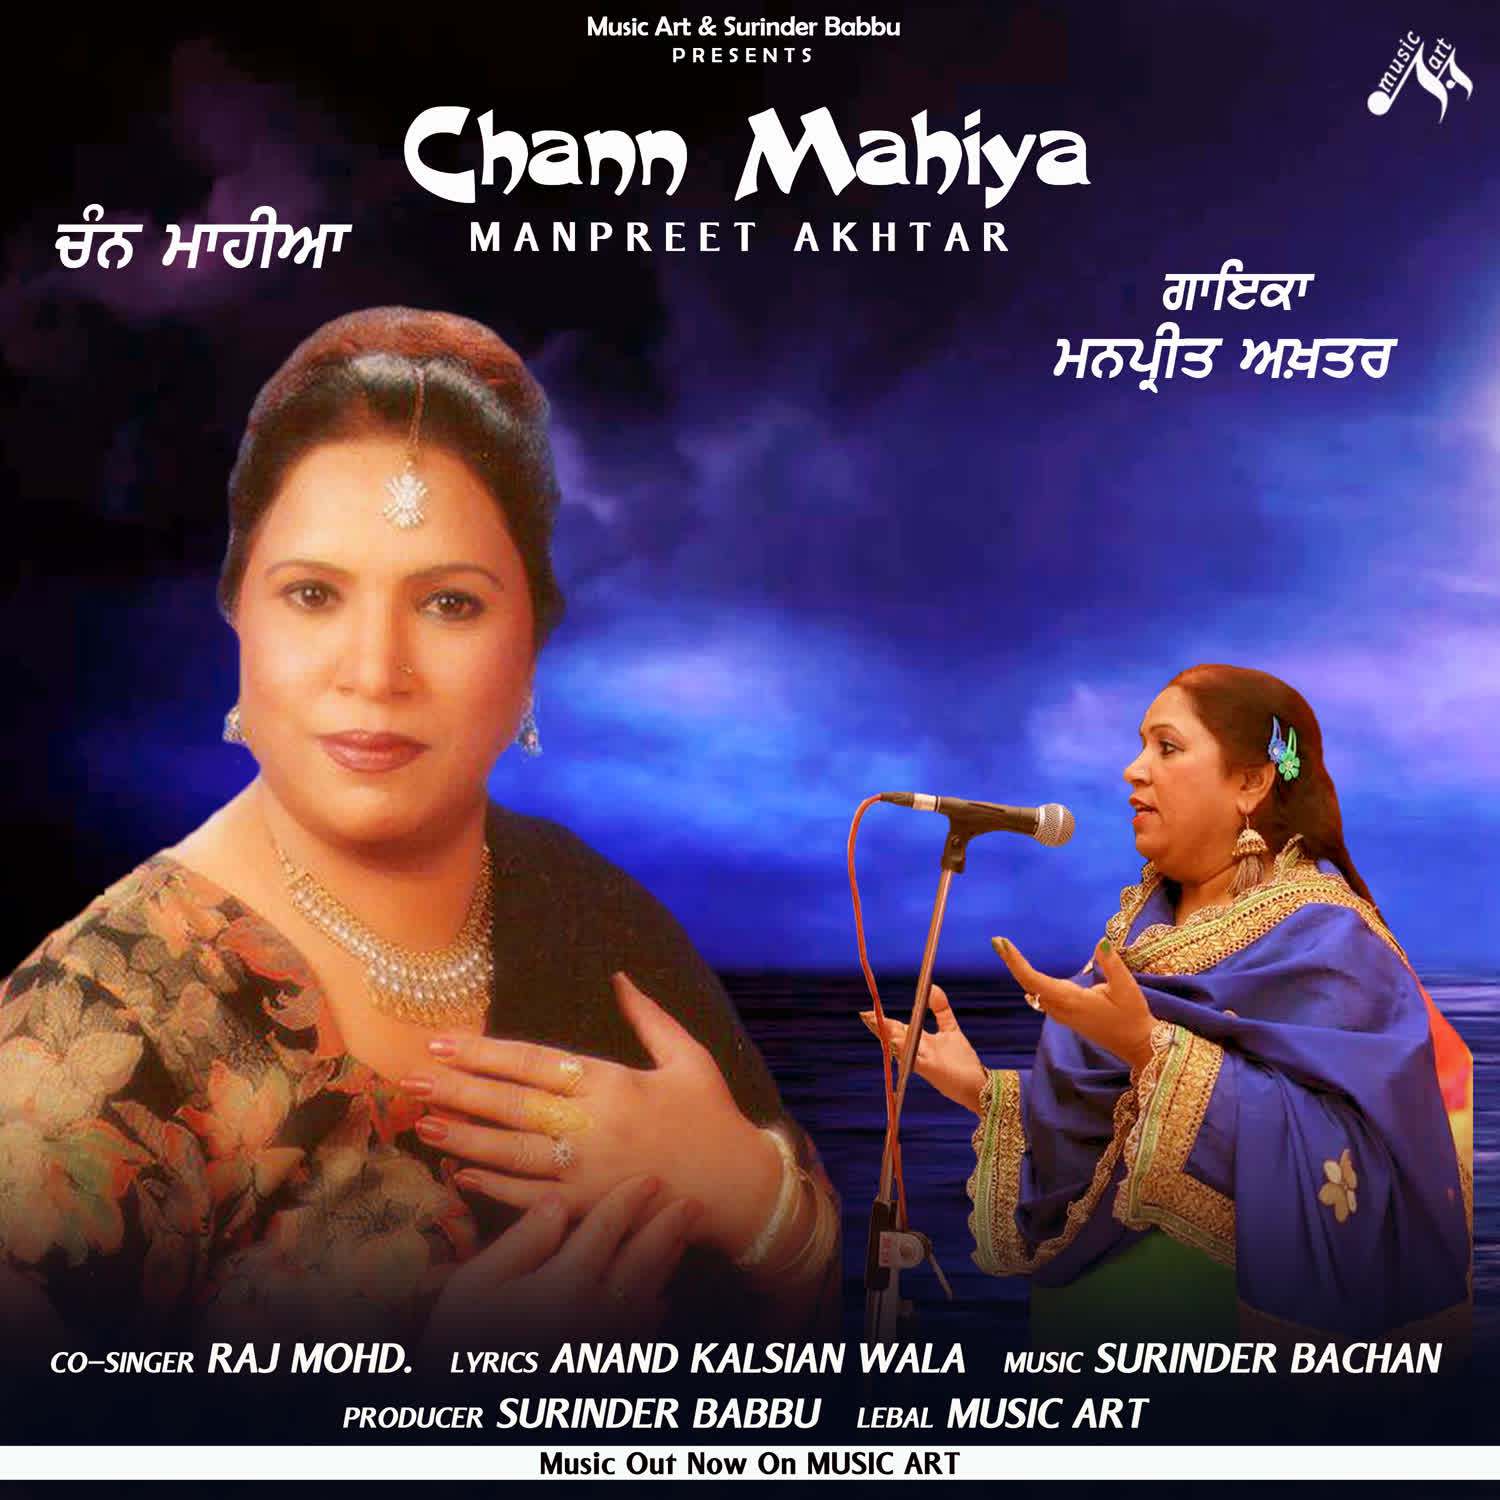 Manpreet Akhtar - Chann Mahiya